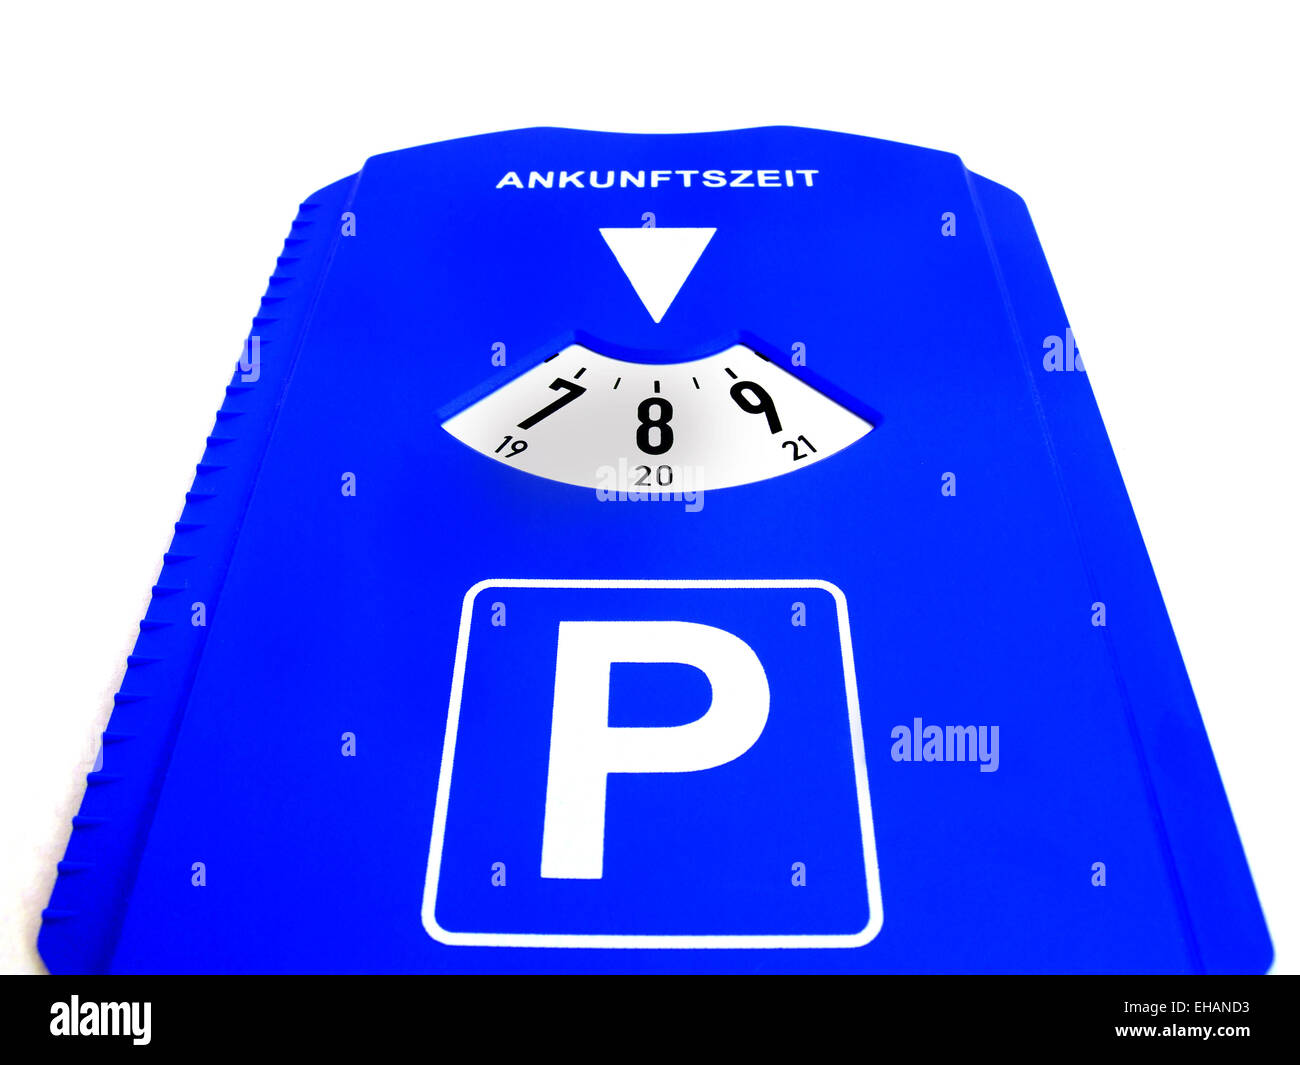 Parkscheibe / parking disk Stock Photo - Alamy